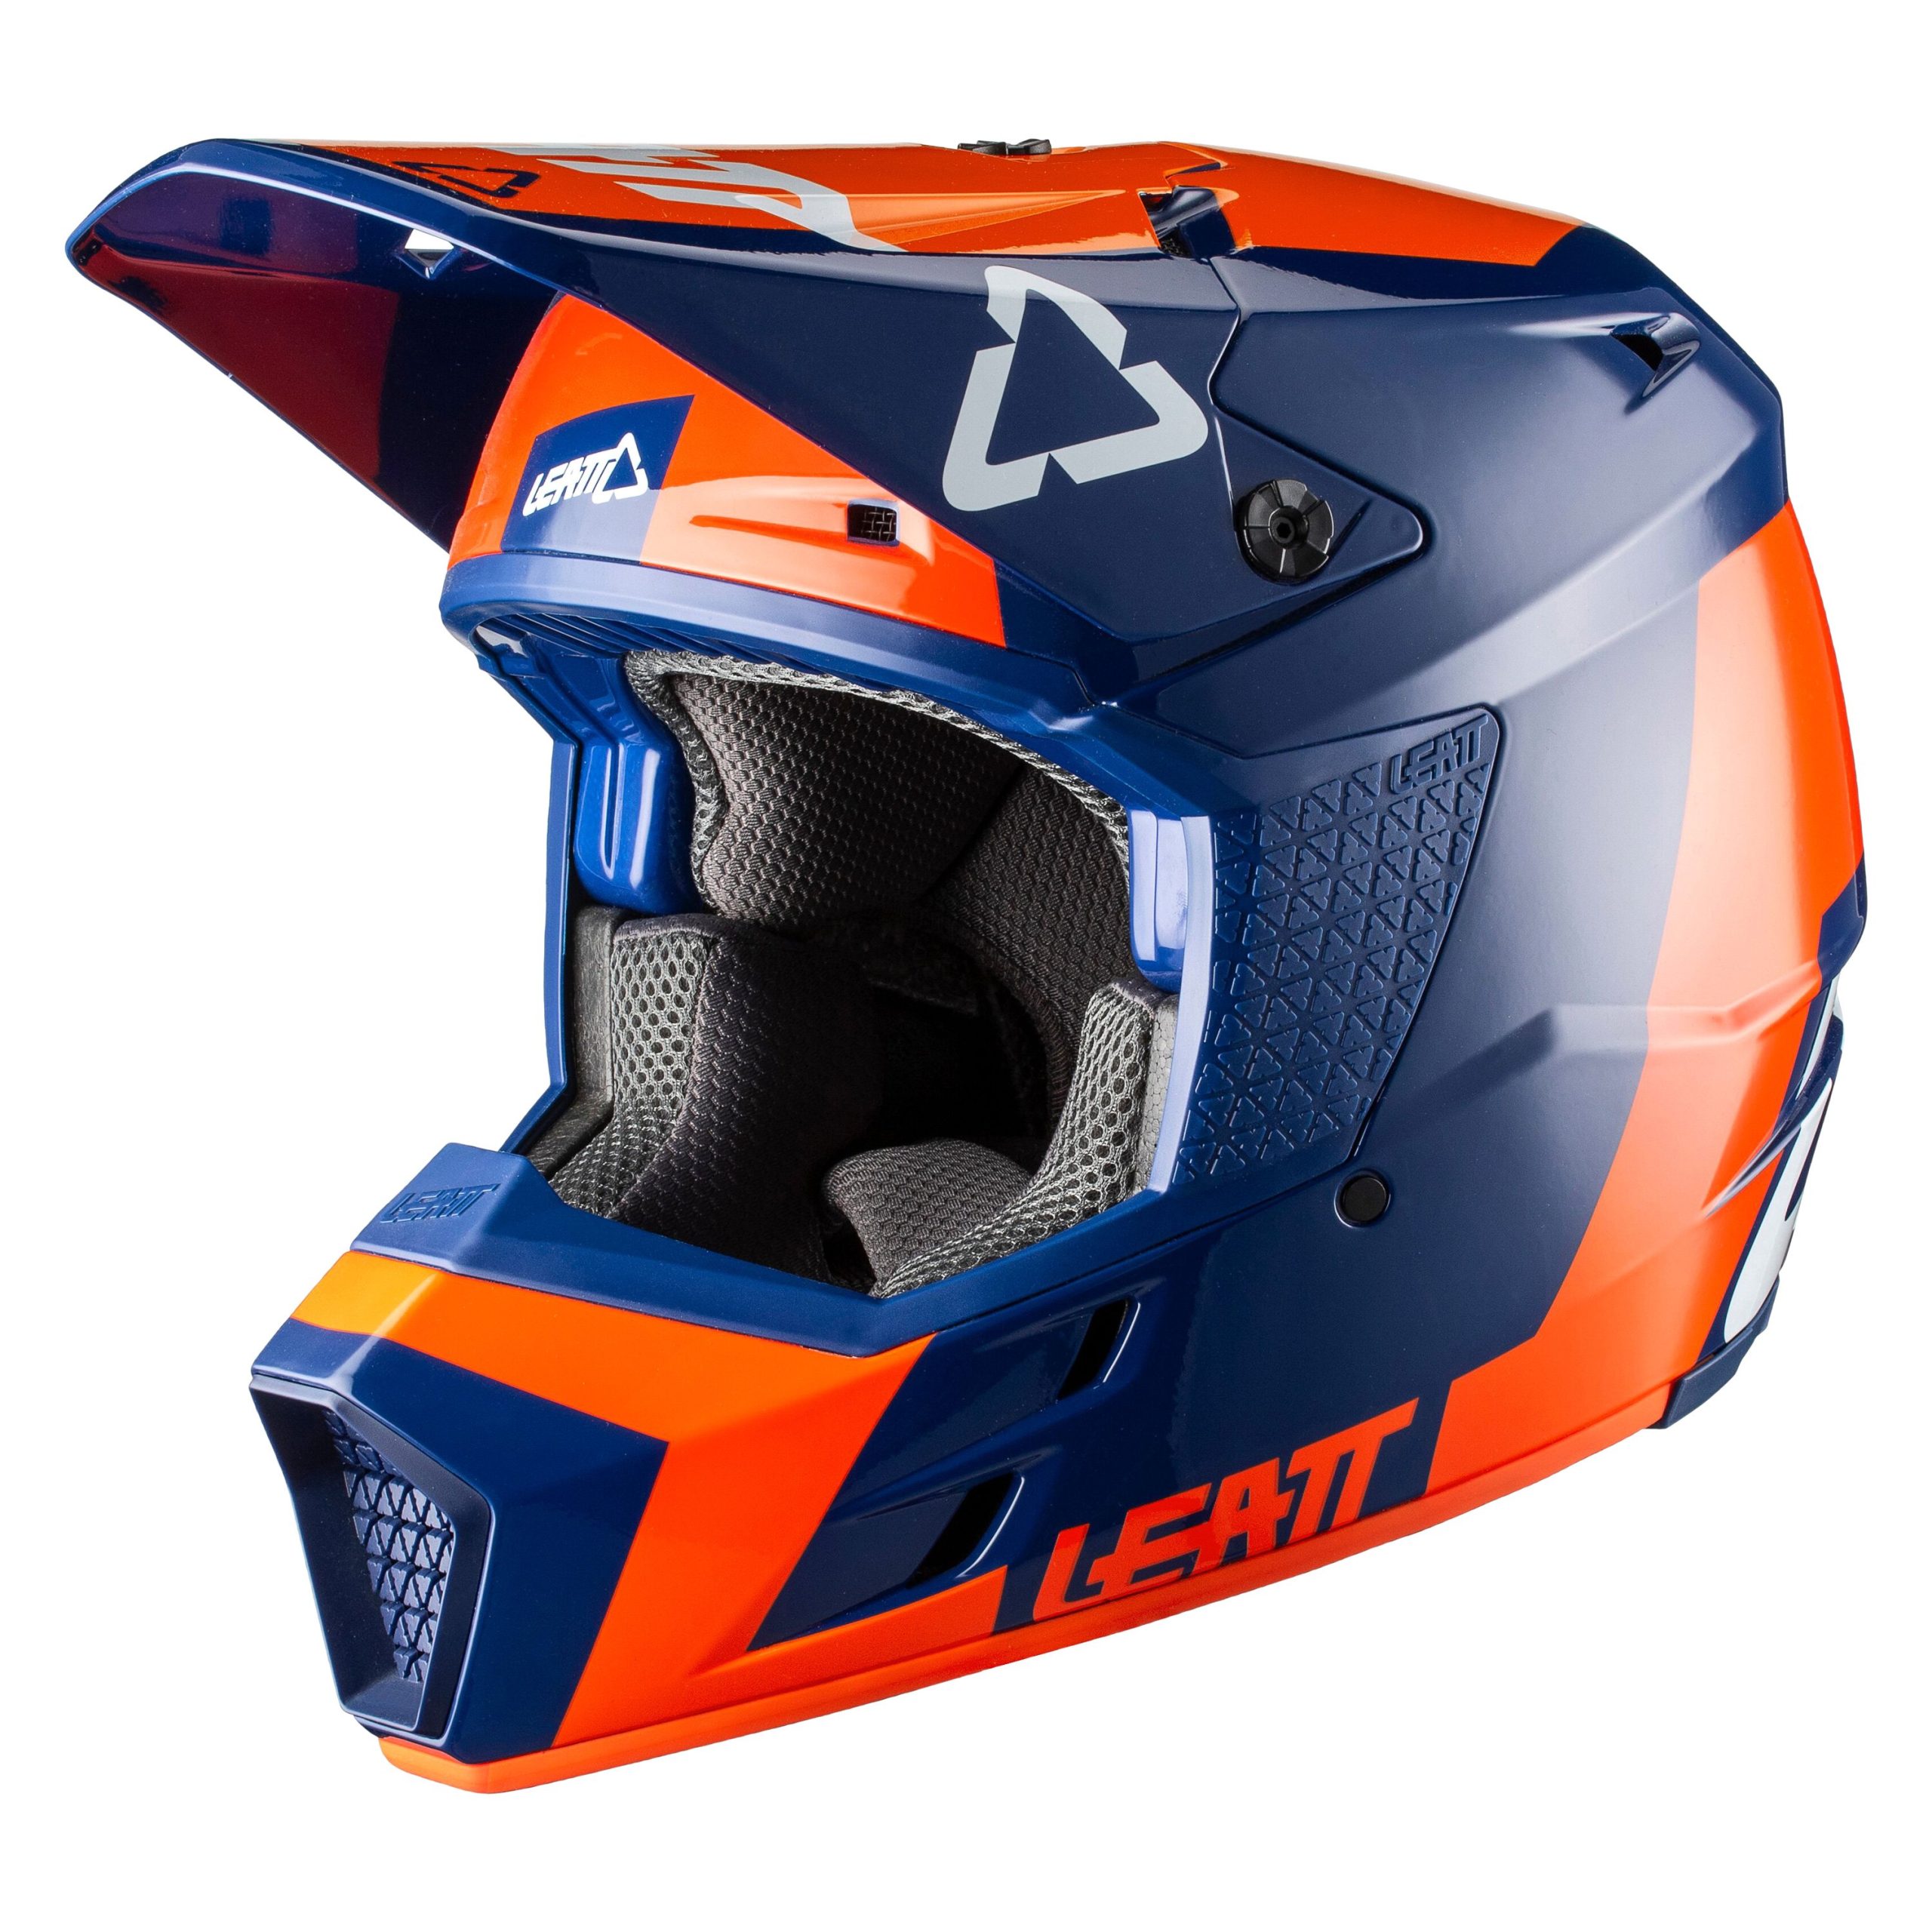 Casco cross bambino Leatt GPX 3.5 junior minicross - Mxlife offerta casco  helmet Leatt